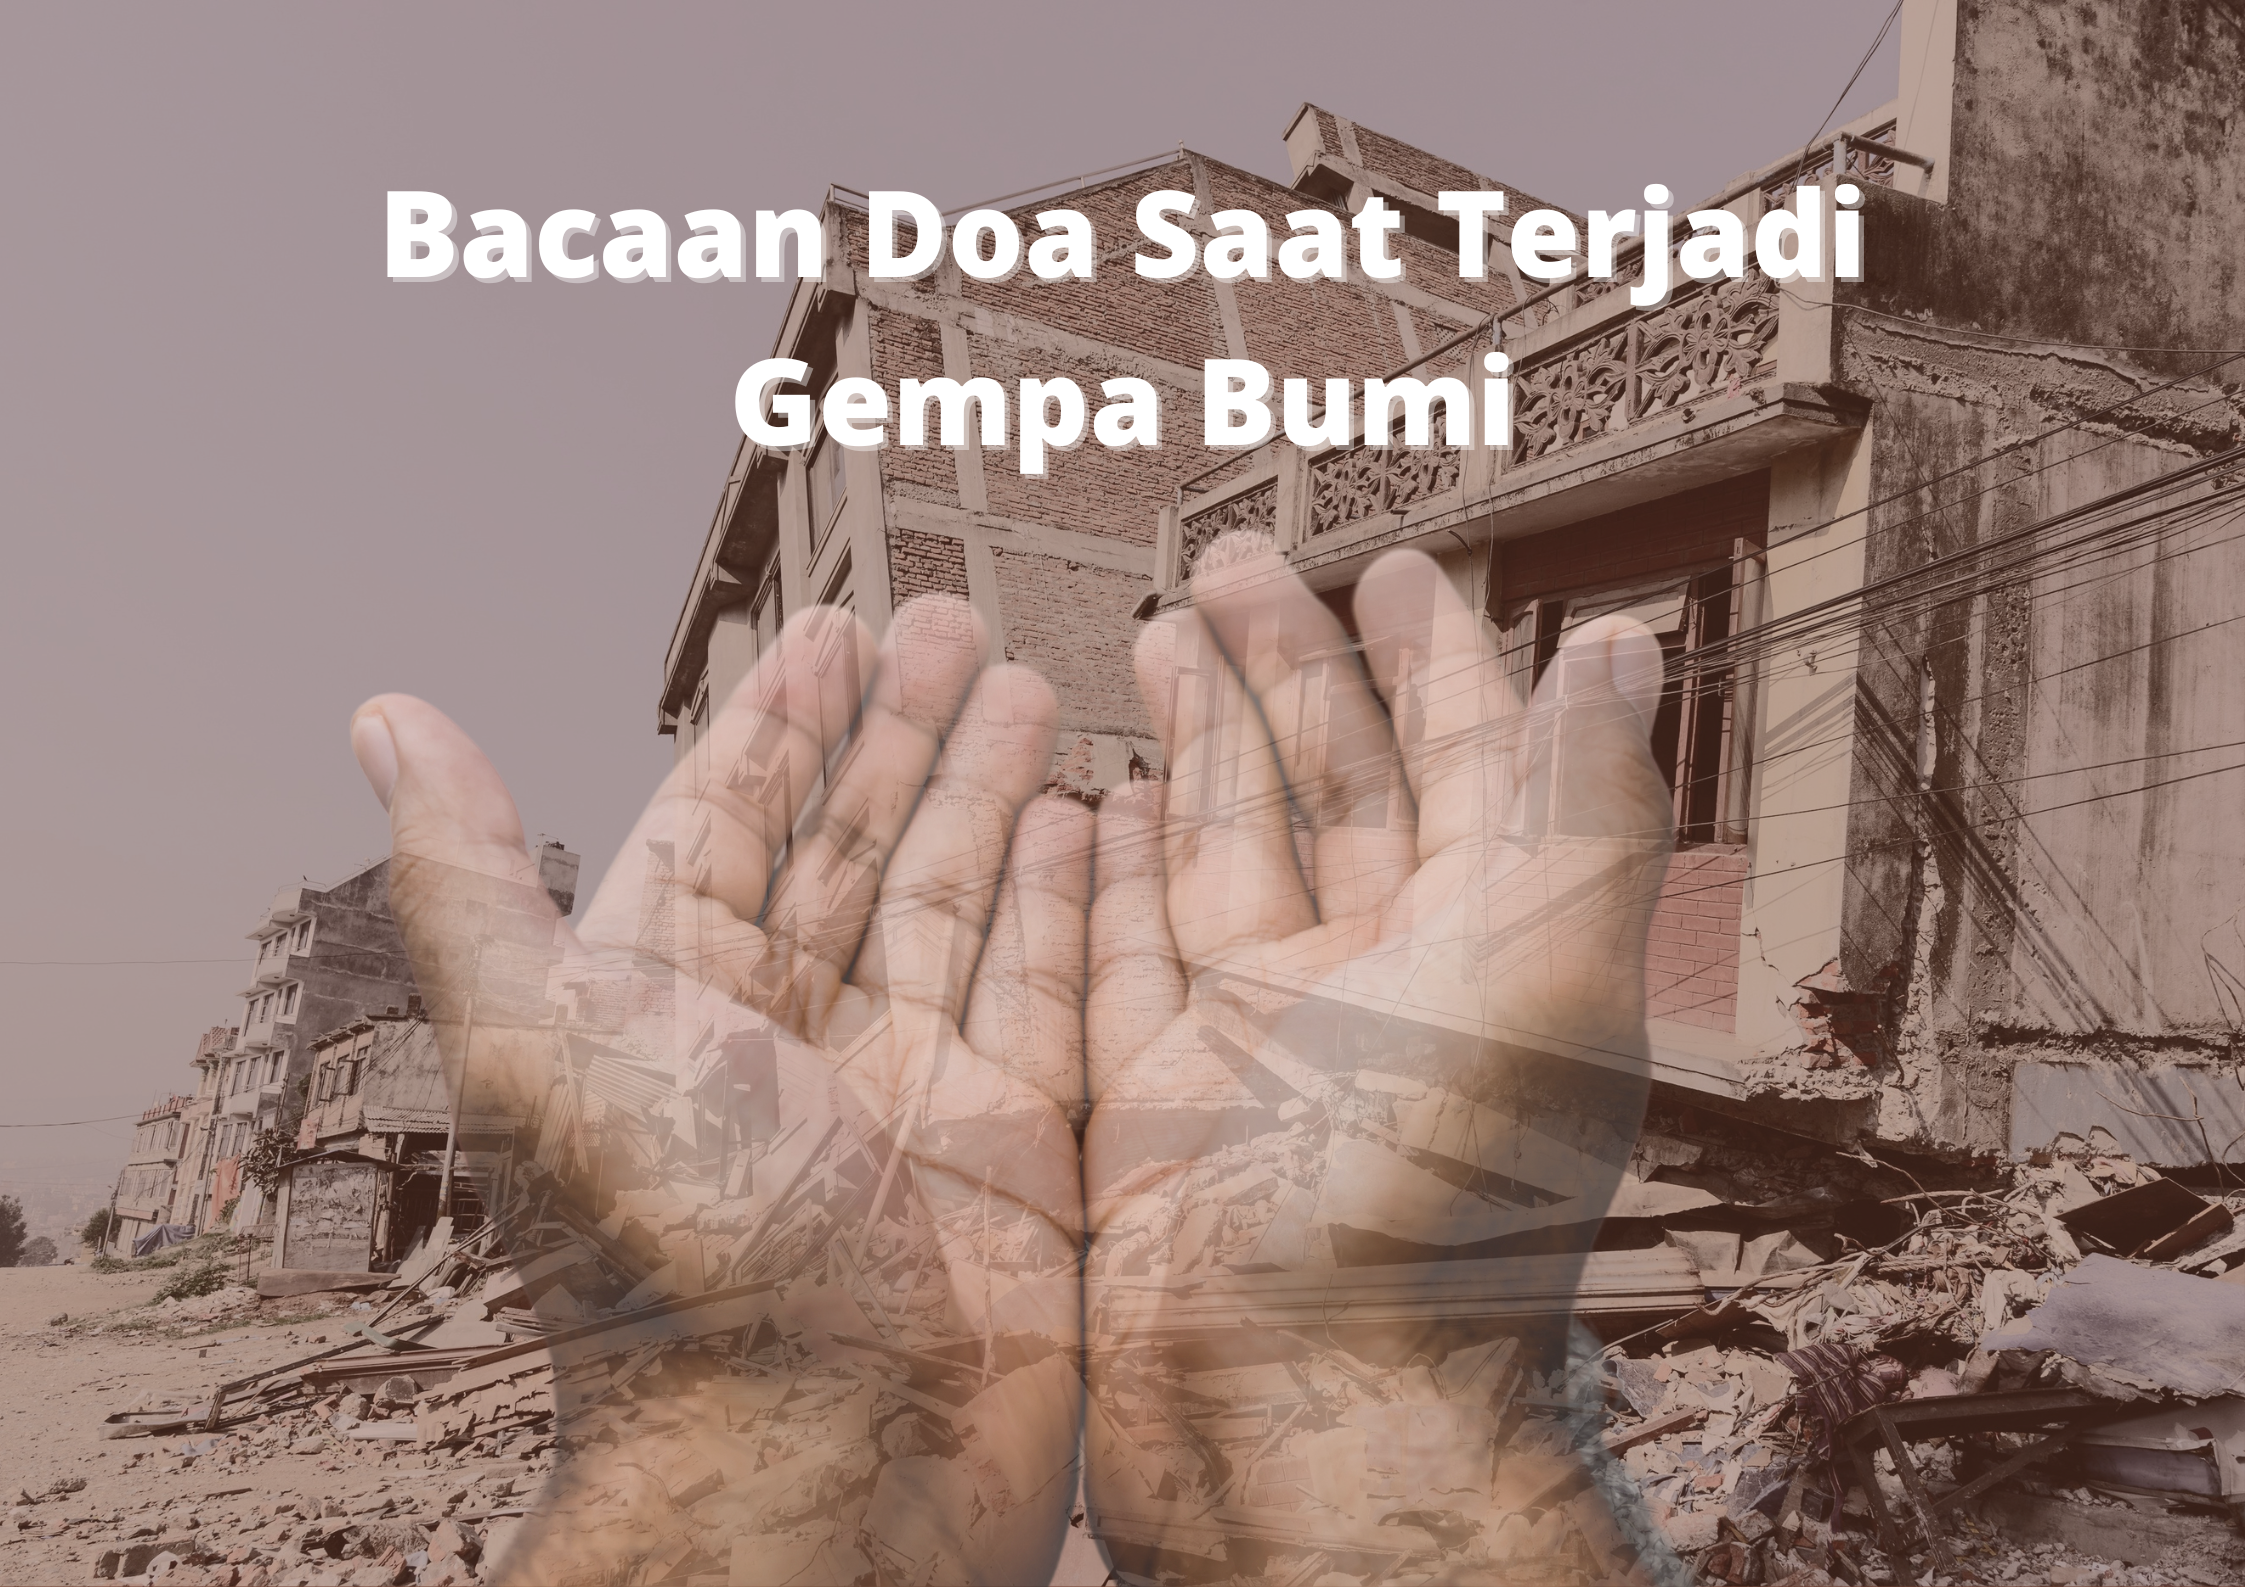 Bacaan Doa Saat Terjadi Gempa Bumi, Lengkap dengan Arab dan Latin!